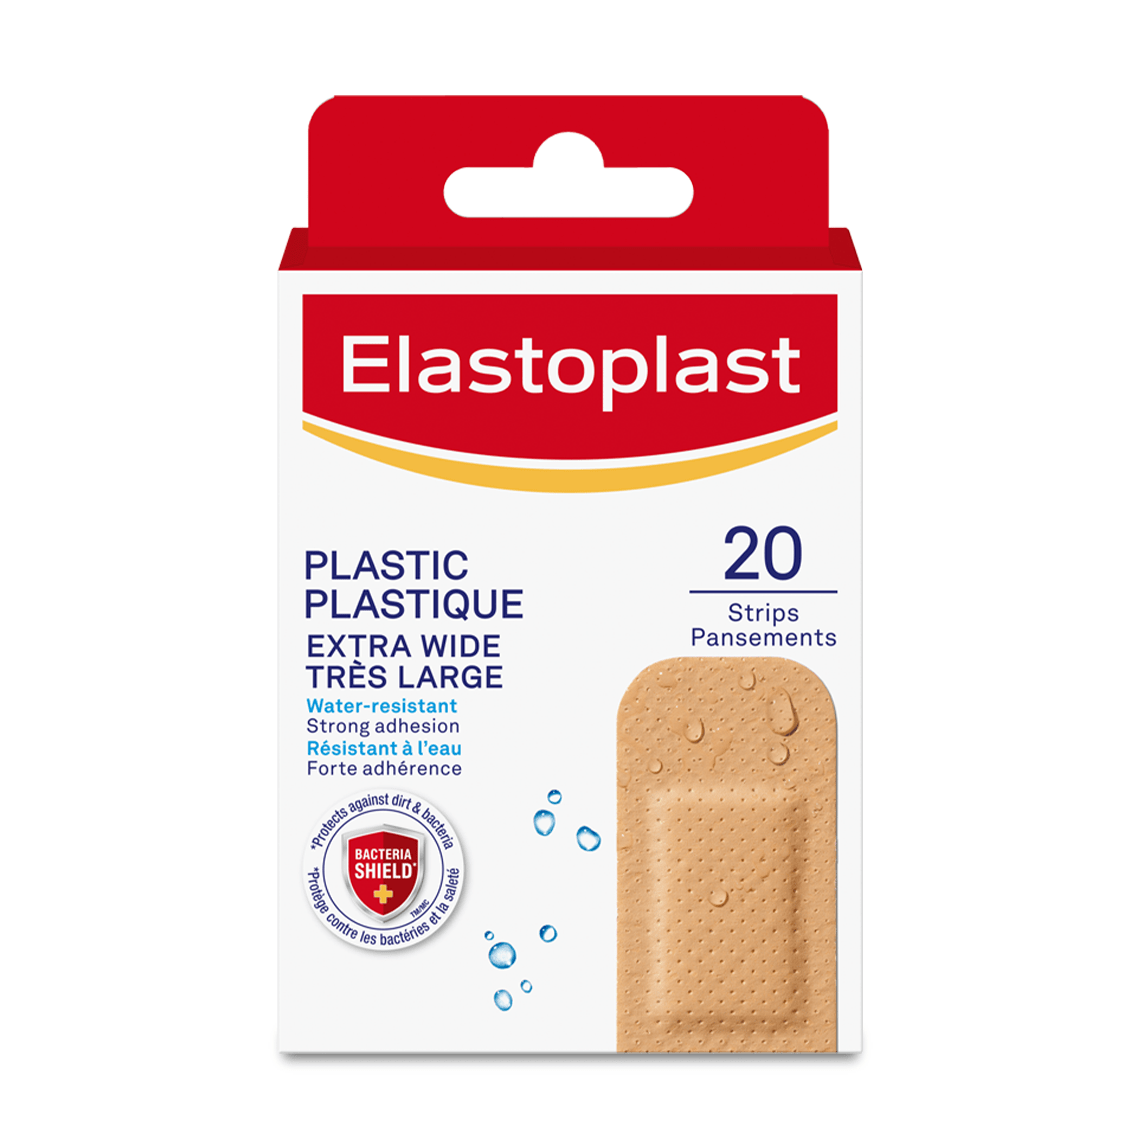 EP_Rebrand_Product_1380x1140_Plastic_20Strips